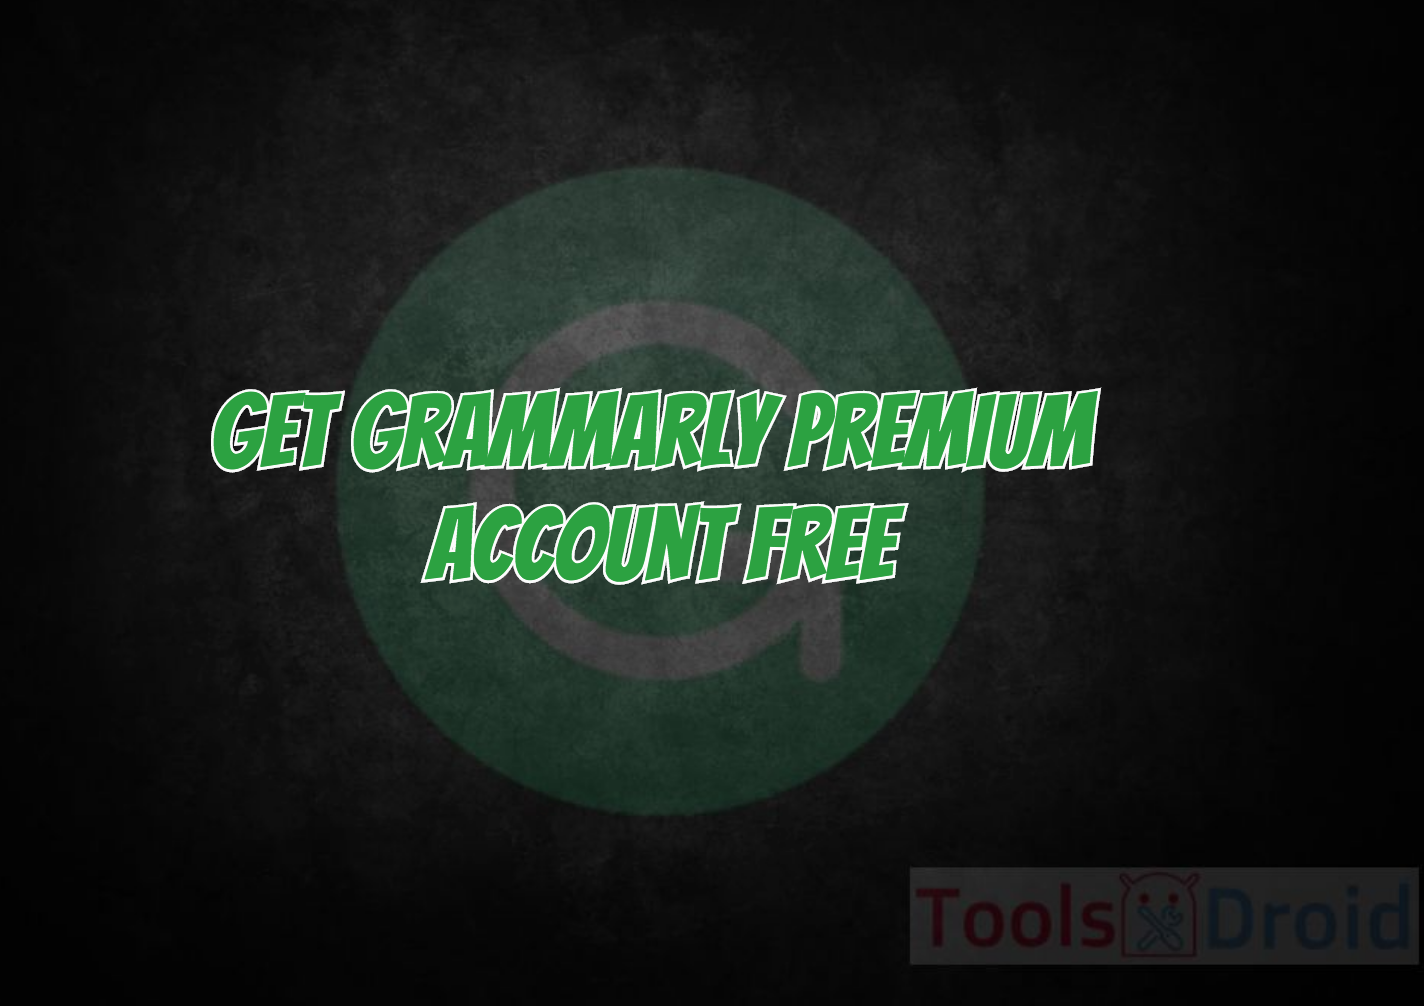 free grammarly premium 2018